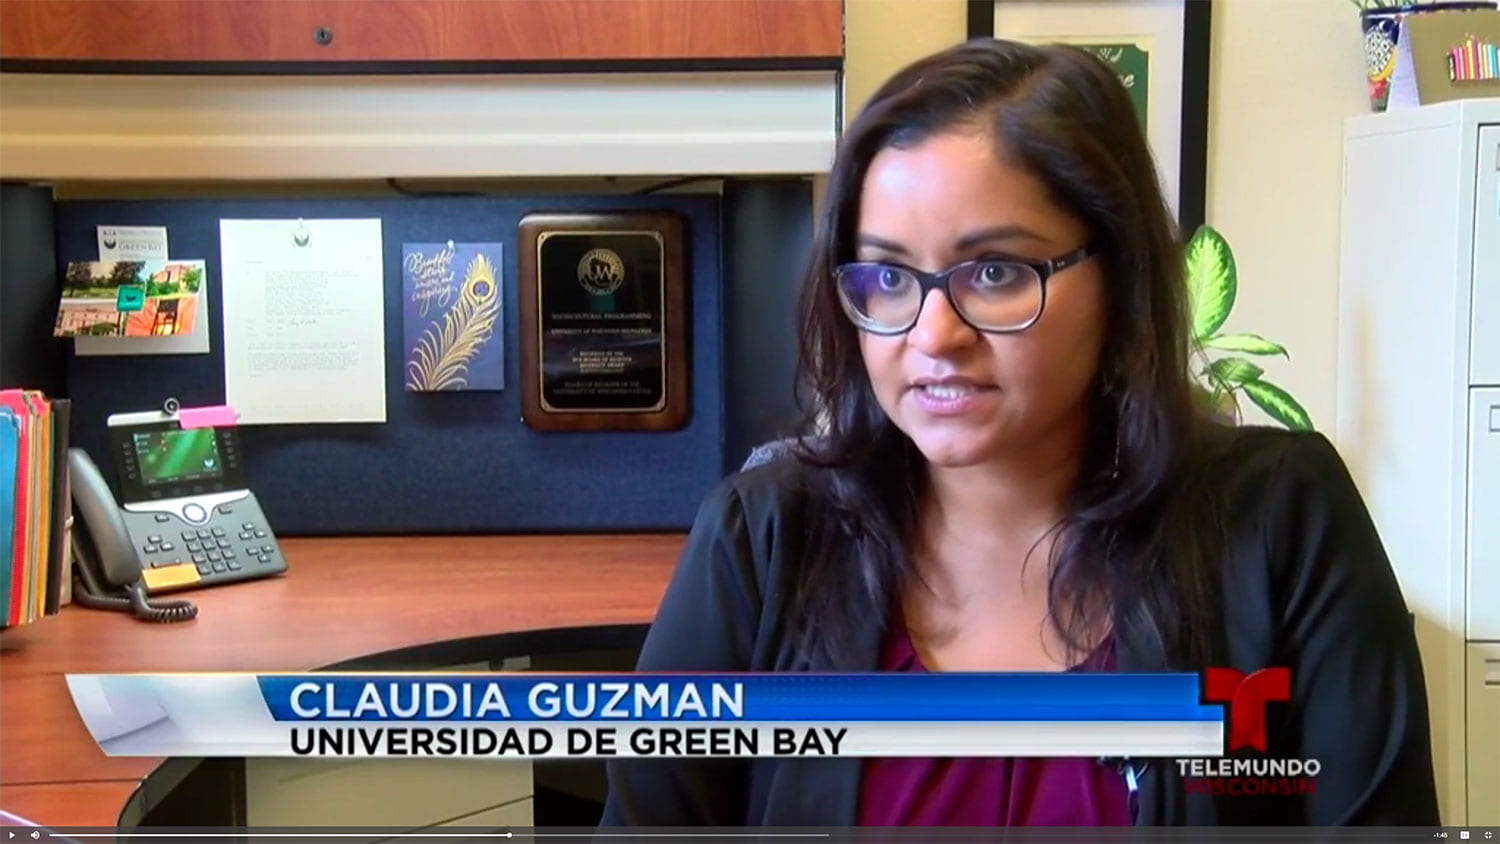 Claudia Guzman interviewed on Telemundo